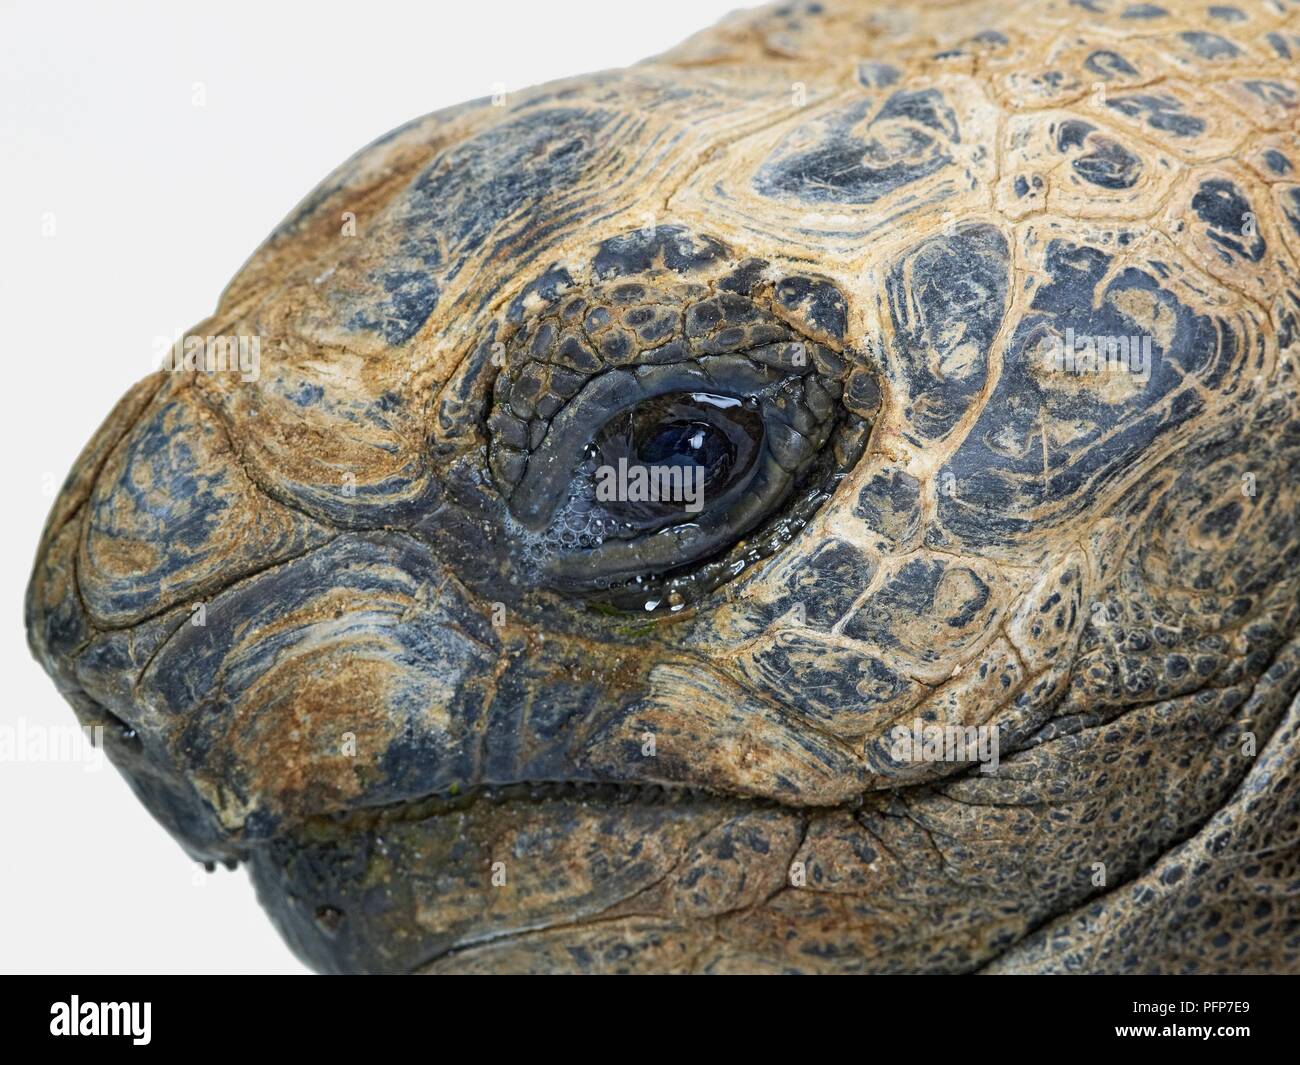 Tartaruga gigante di Aldabra (Aldabrachelys gigantea) testa mostra occhi e pelle dura, close-up Foto Stock